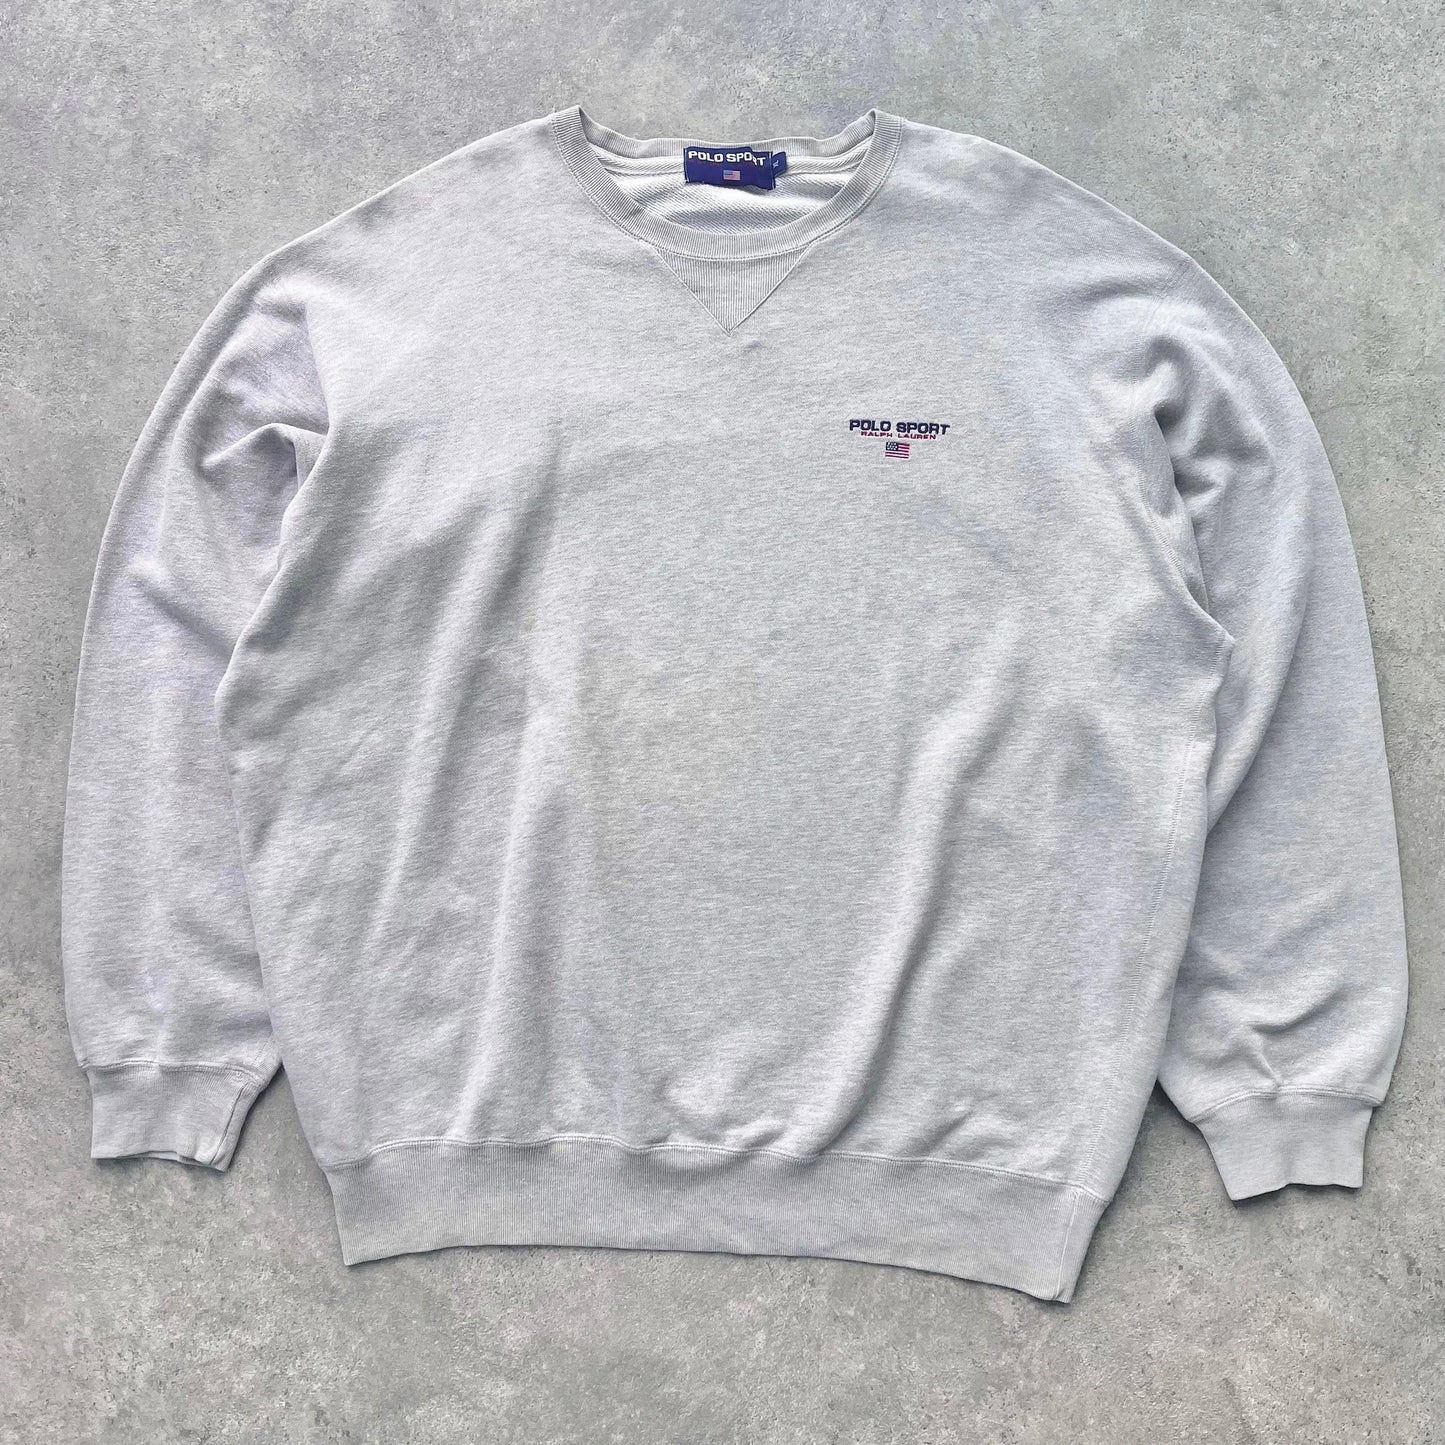 Polo Sport Ralph Lauren 1990s heavyweight embroidered sweatshirt (XL) - Known Source